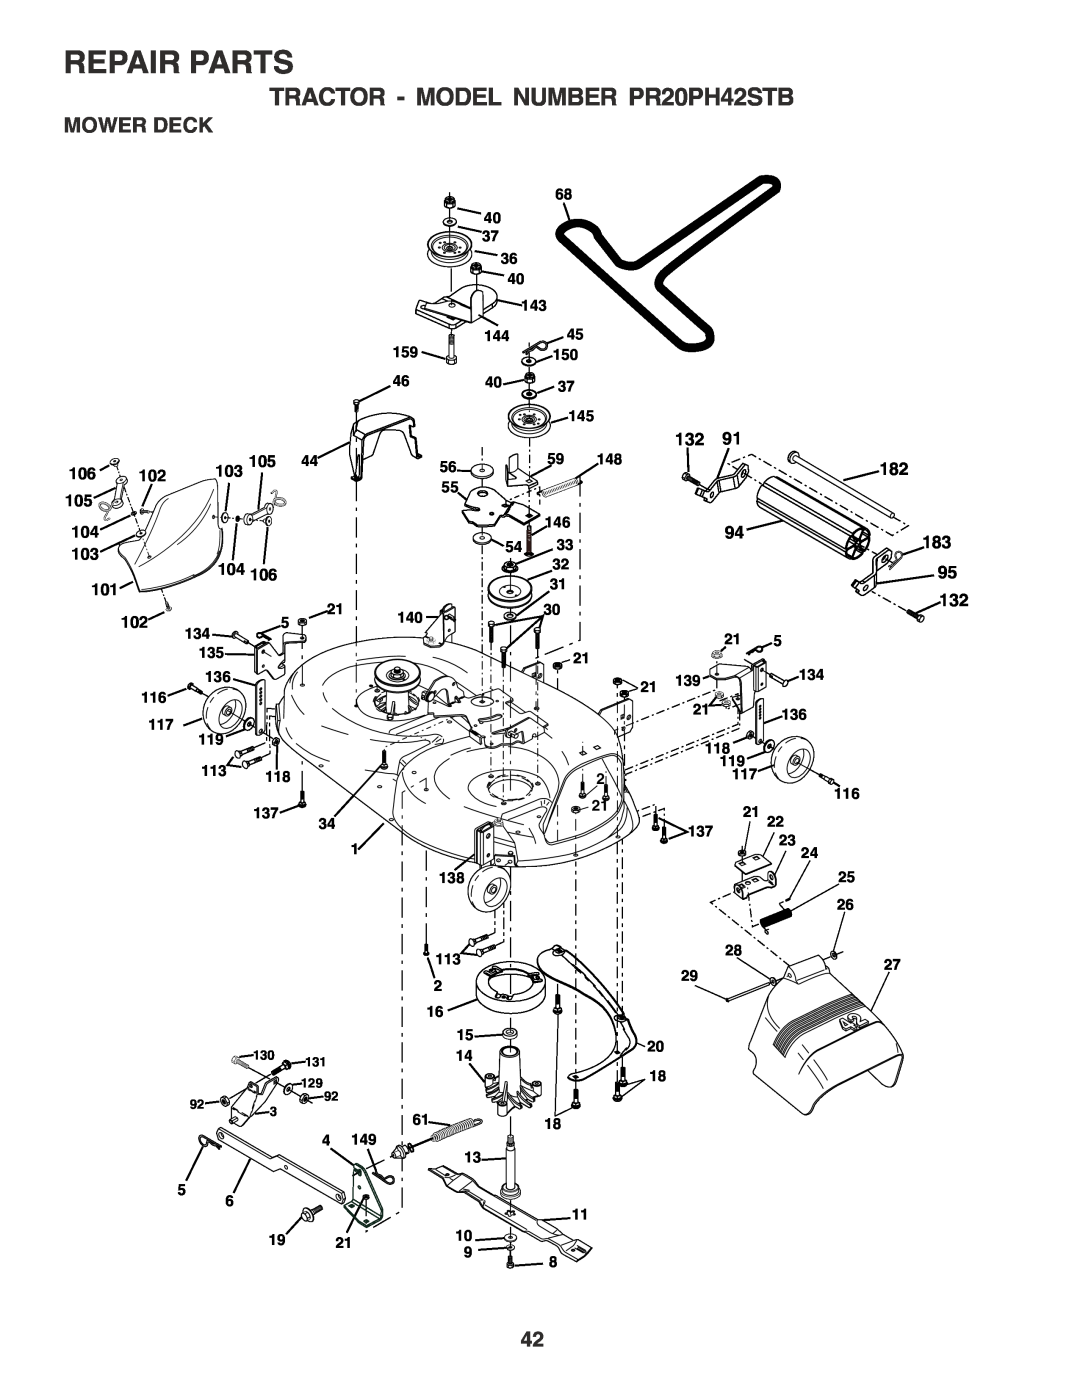 Poulan owner manual Mower Deck, Repair Parts, TRACTOR - MODEL NUMBER PR20PH42STB, 139134, 119 